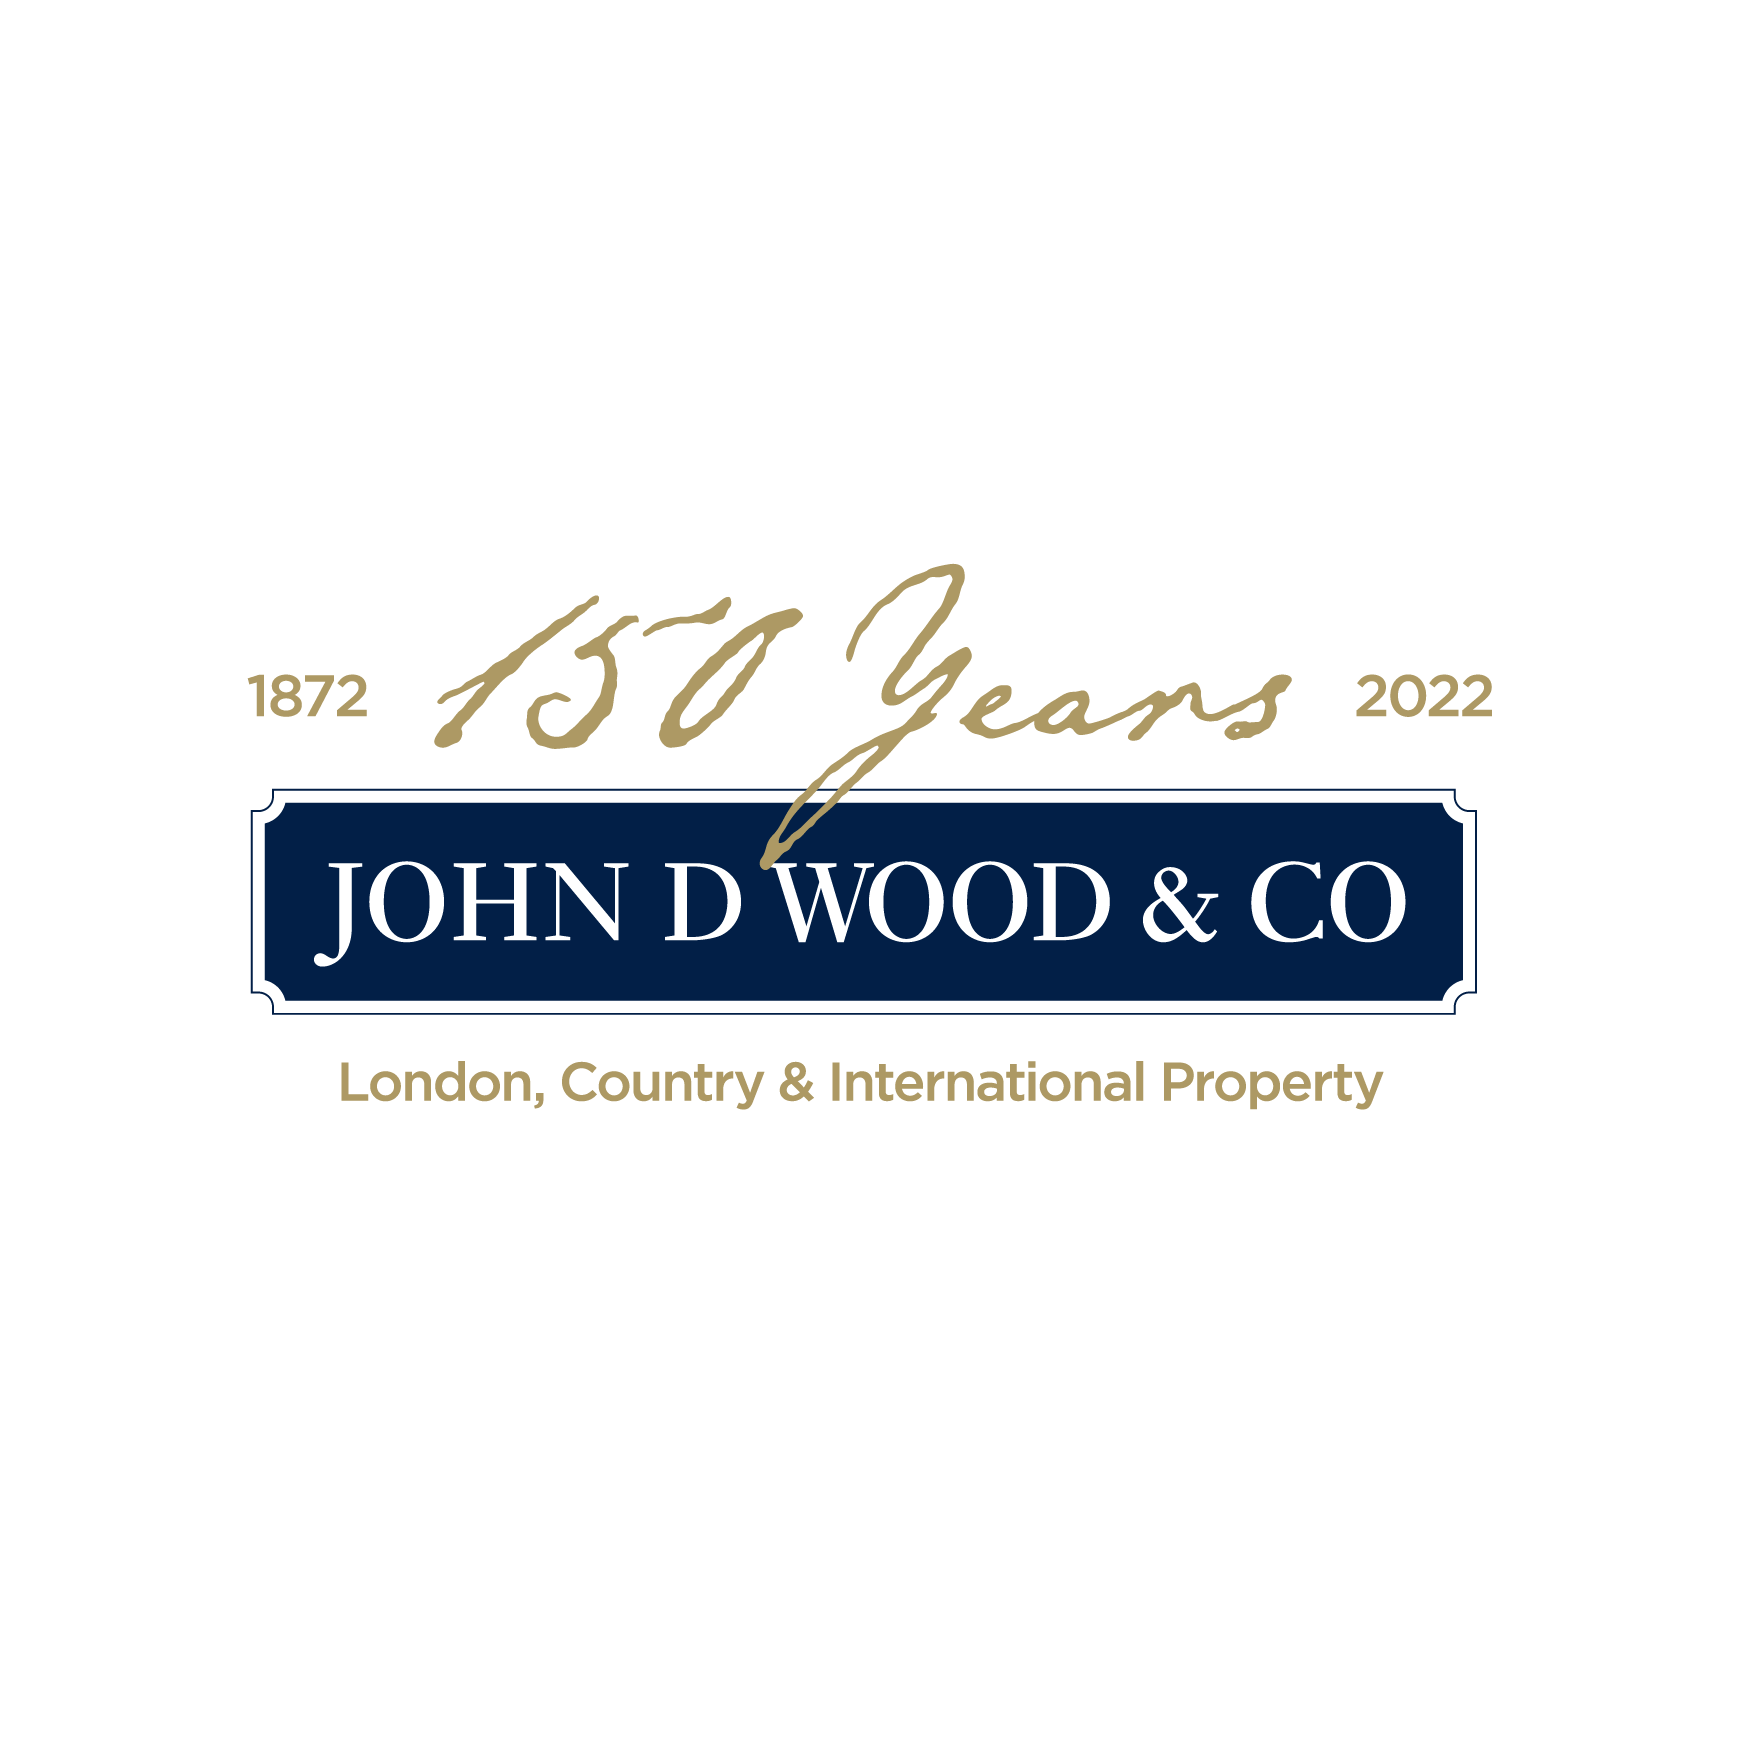 John D Wood & Co. Estate Agents Cadogan Street - London, London SW3 2QJ - 020 3151 4149 | ShowMeLocal.com